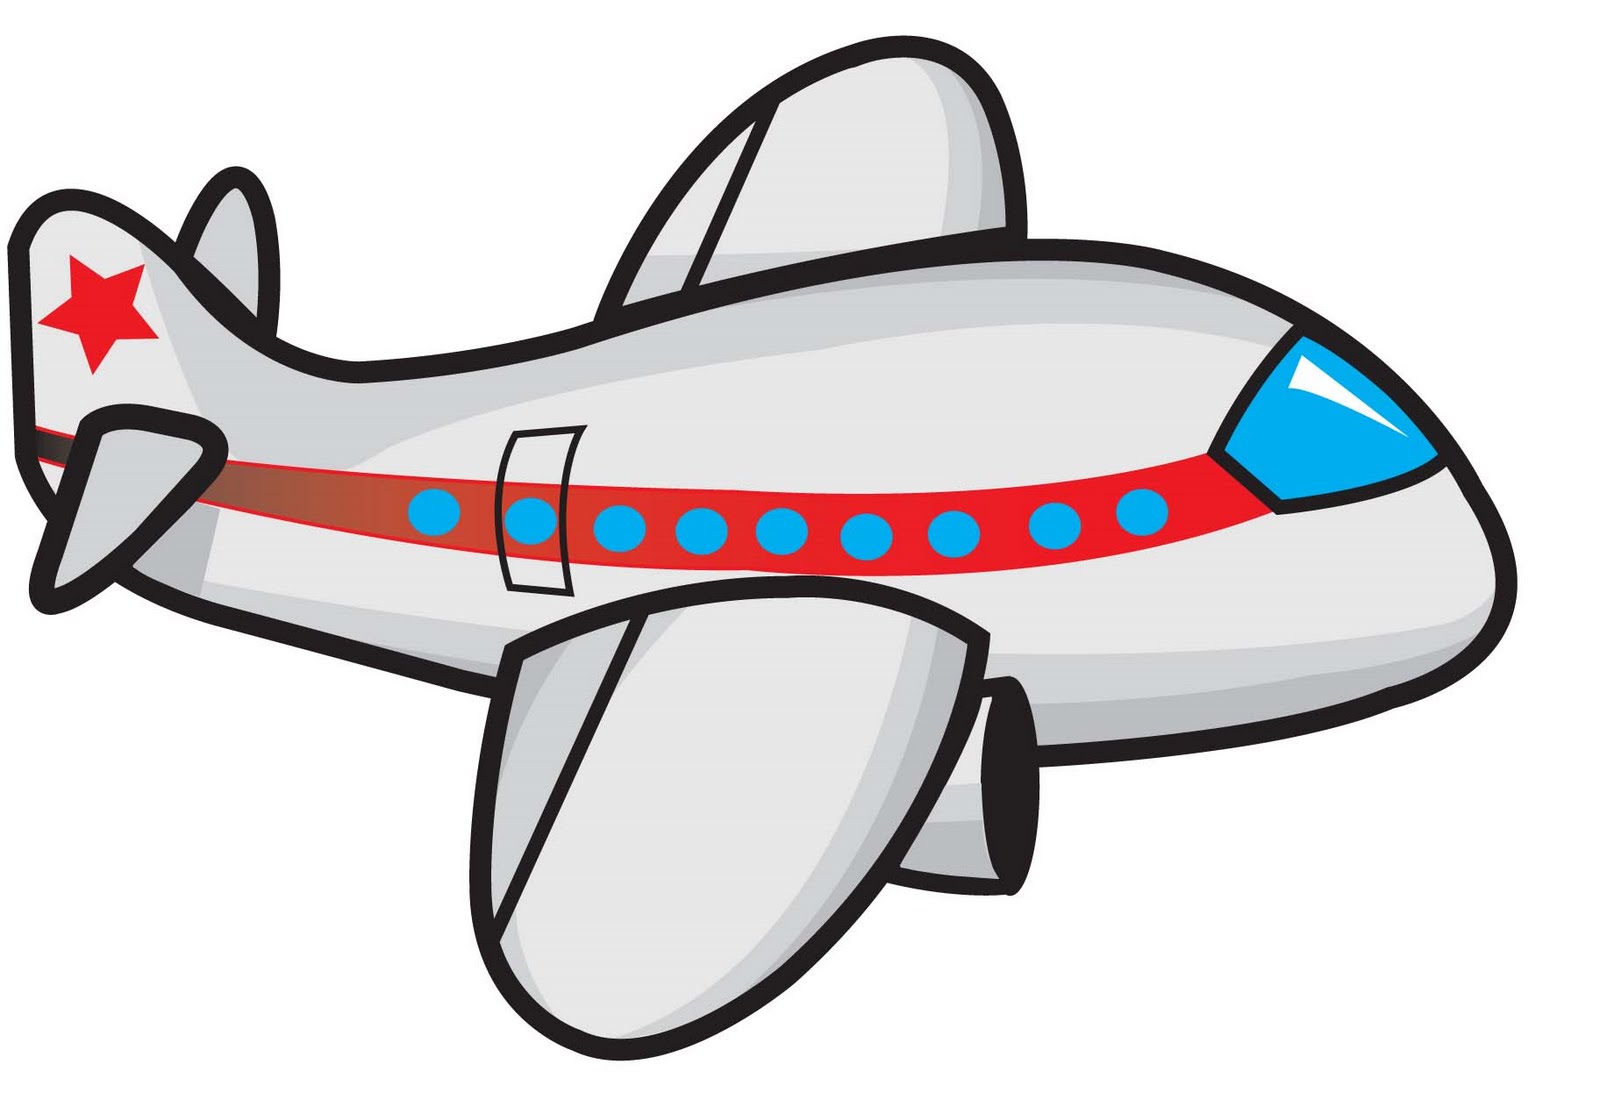 Free Airplane Cartoon Png, Download Free Clip Art, Free ...